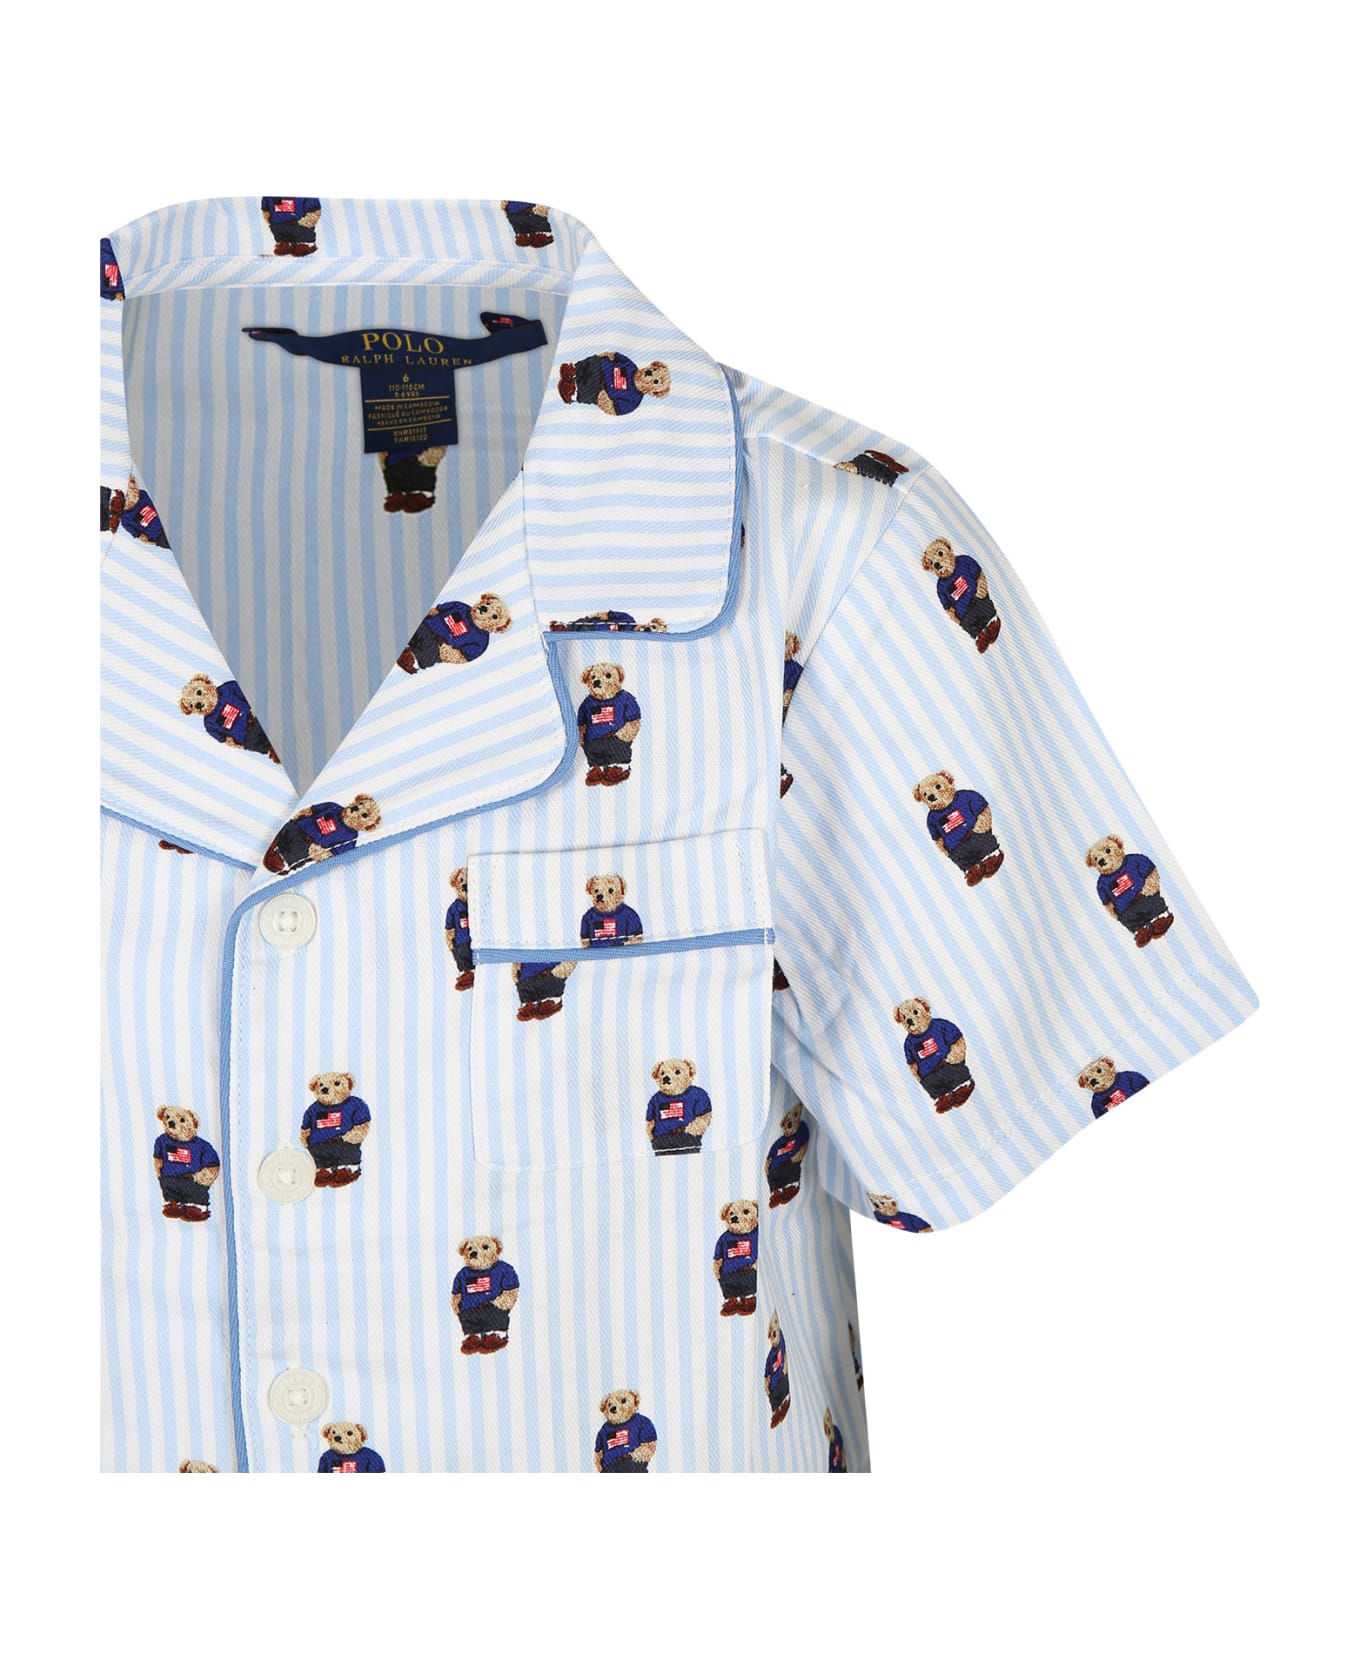 Ralph Lauren Light Blue Cotton Pajamas For Boy With Bears - Light Blue